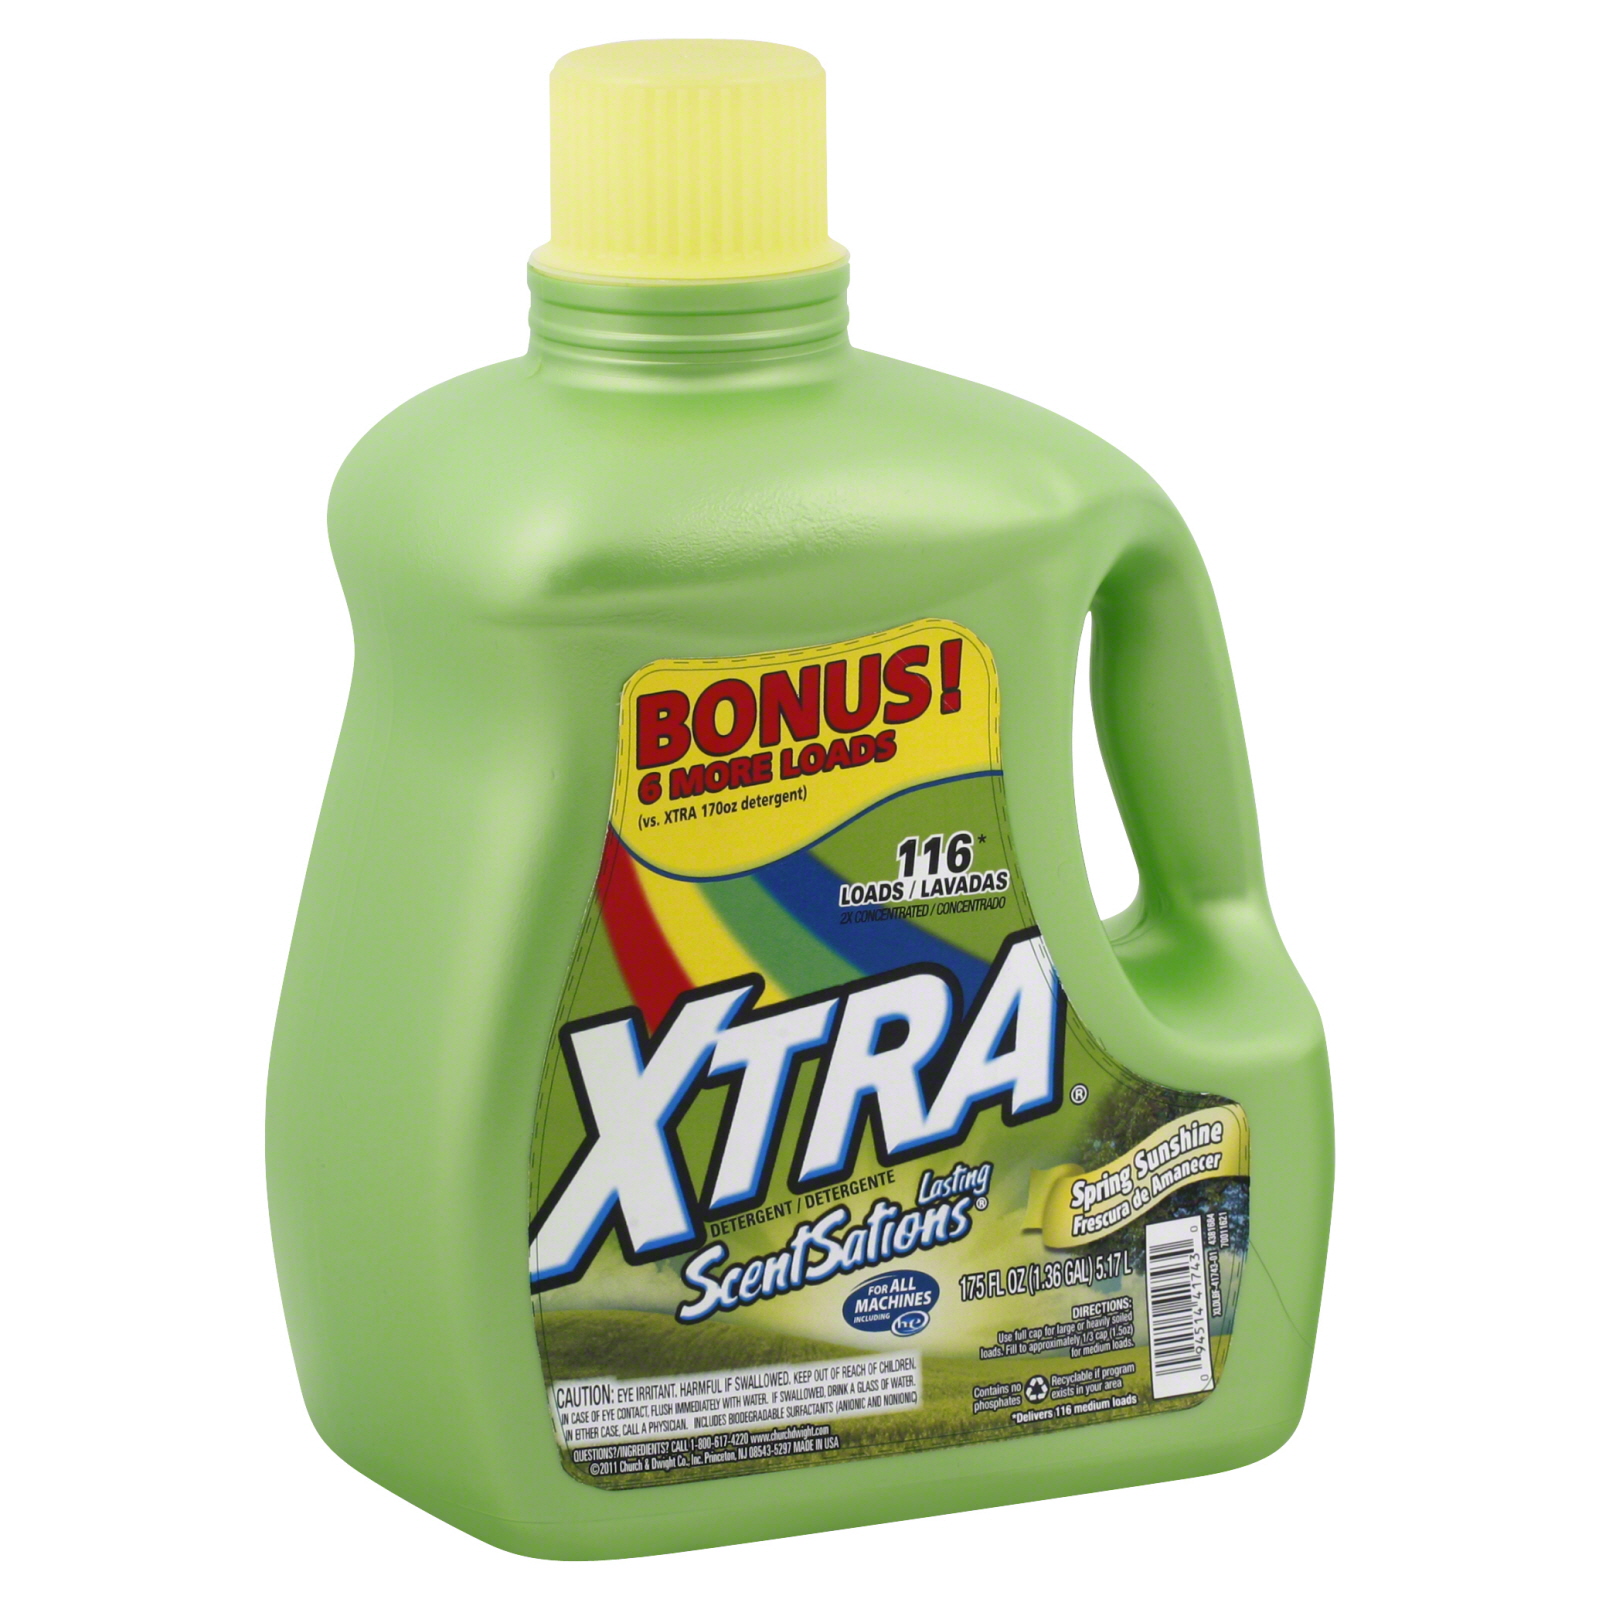 Xtra IQ 2X Spring Sunshine Laundry Detergent 175 fl oz